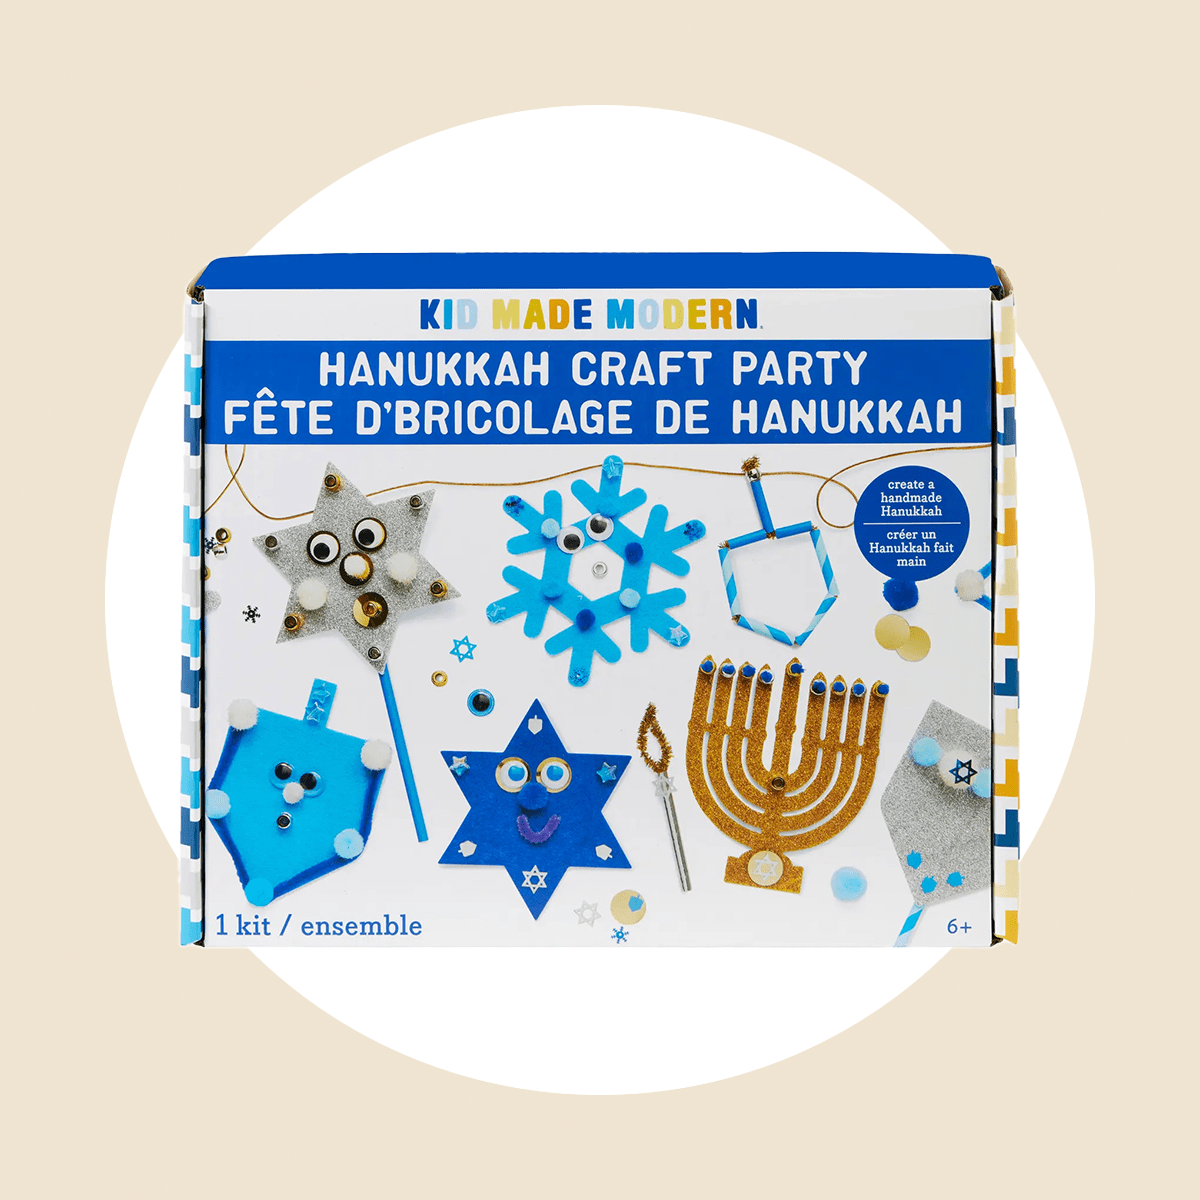 Hanukkah Craft Party Kit Ecomm Via Nordstrom.com